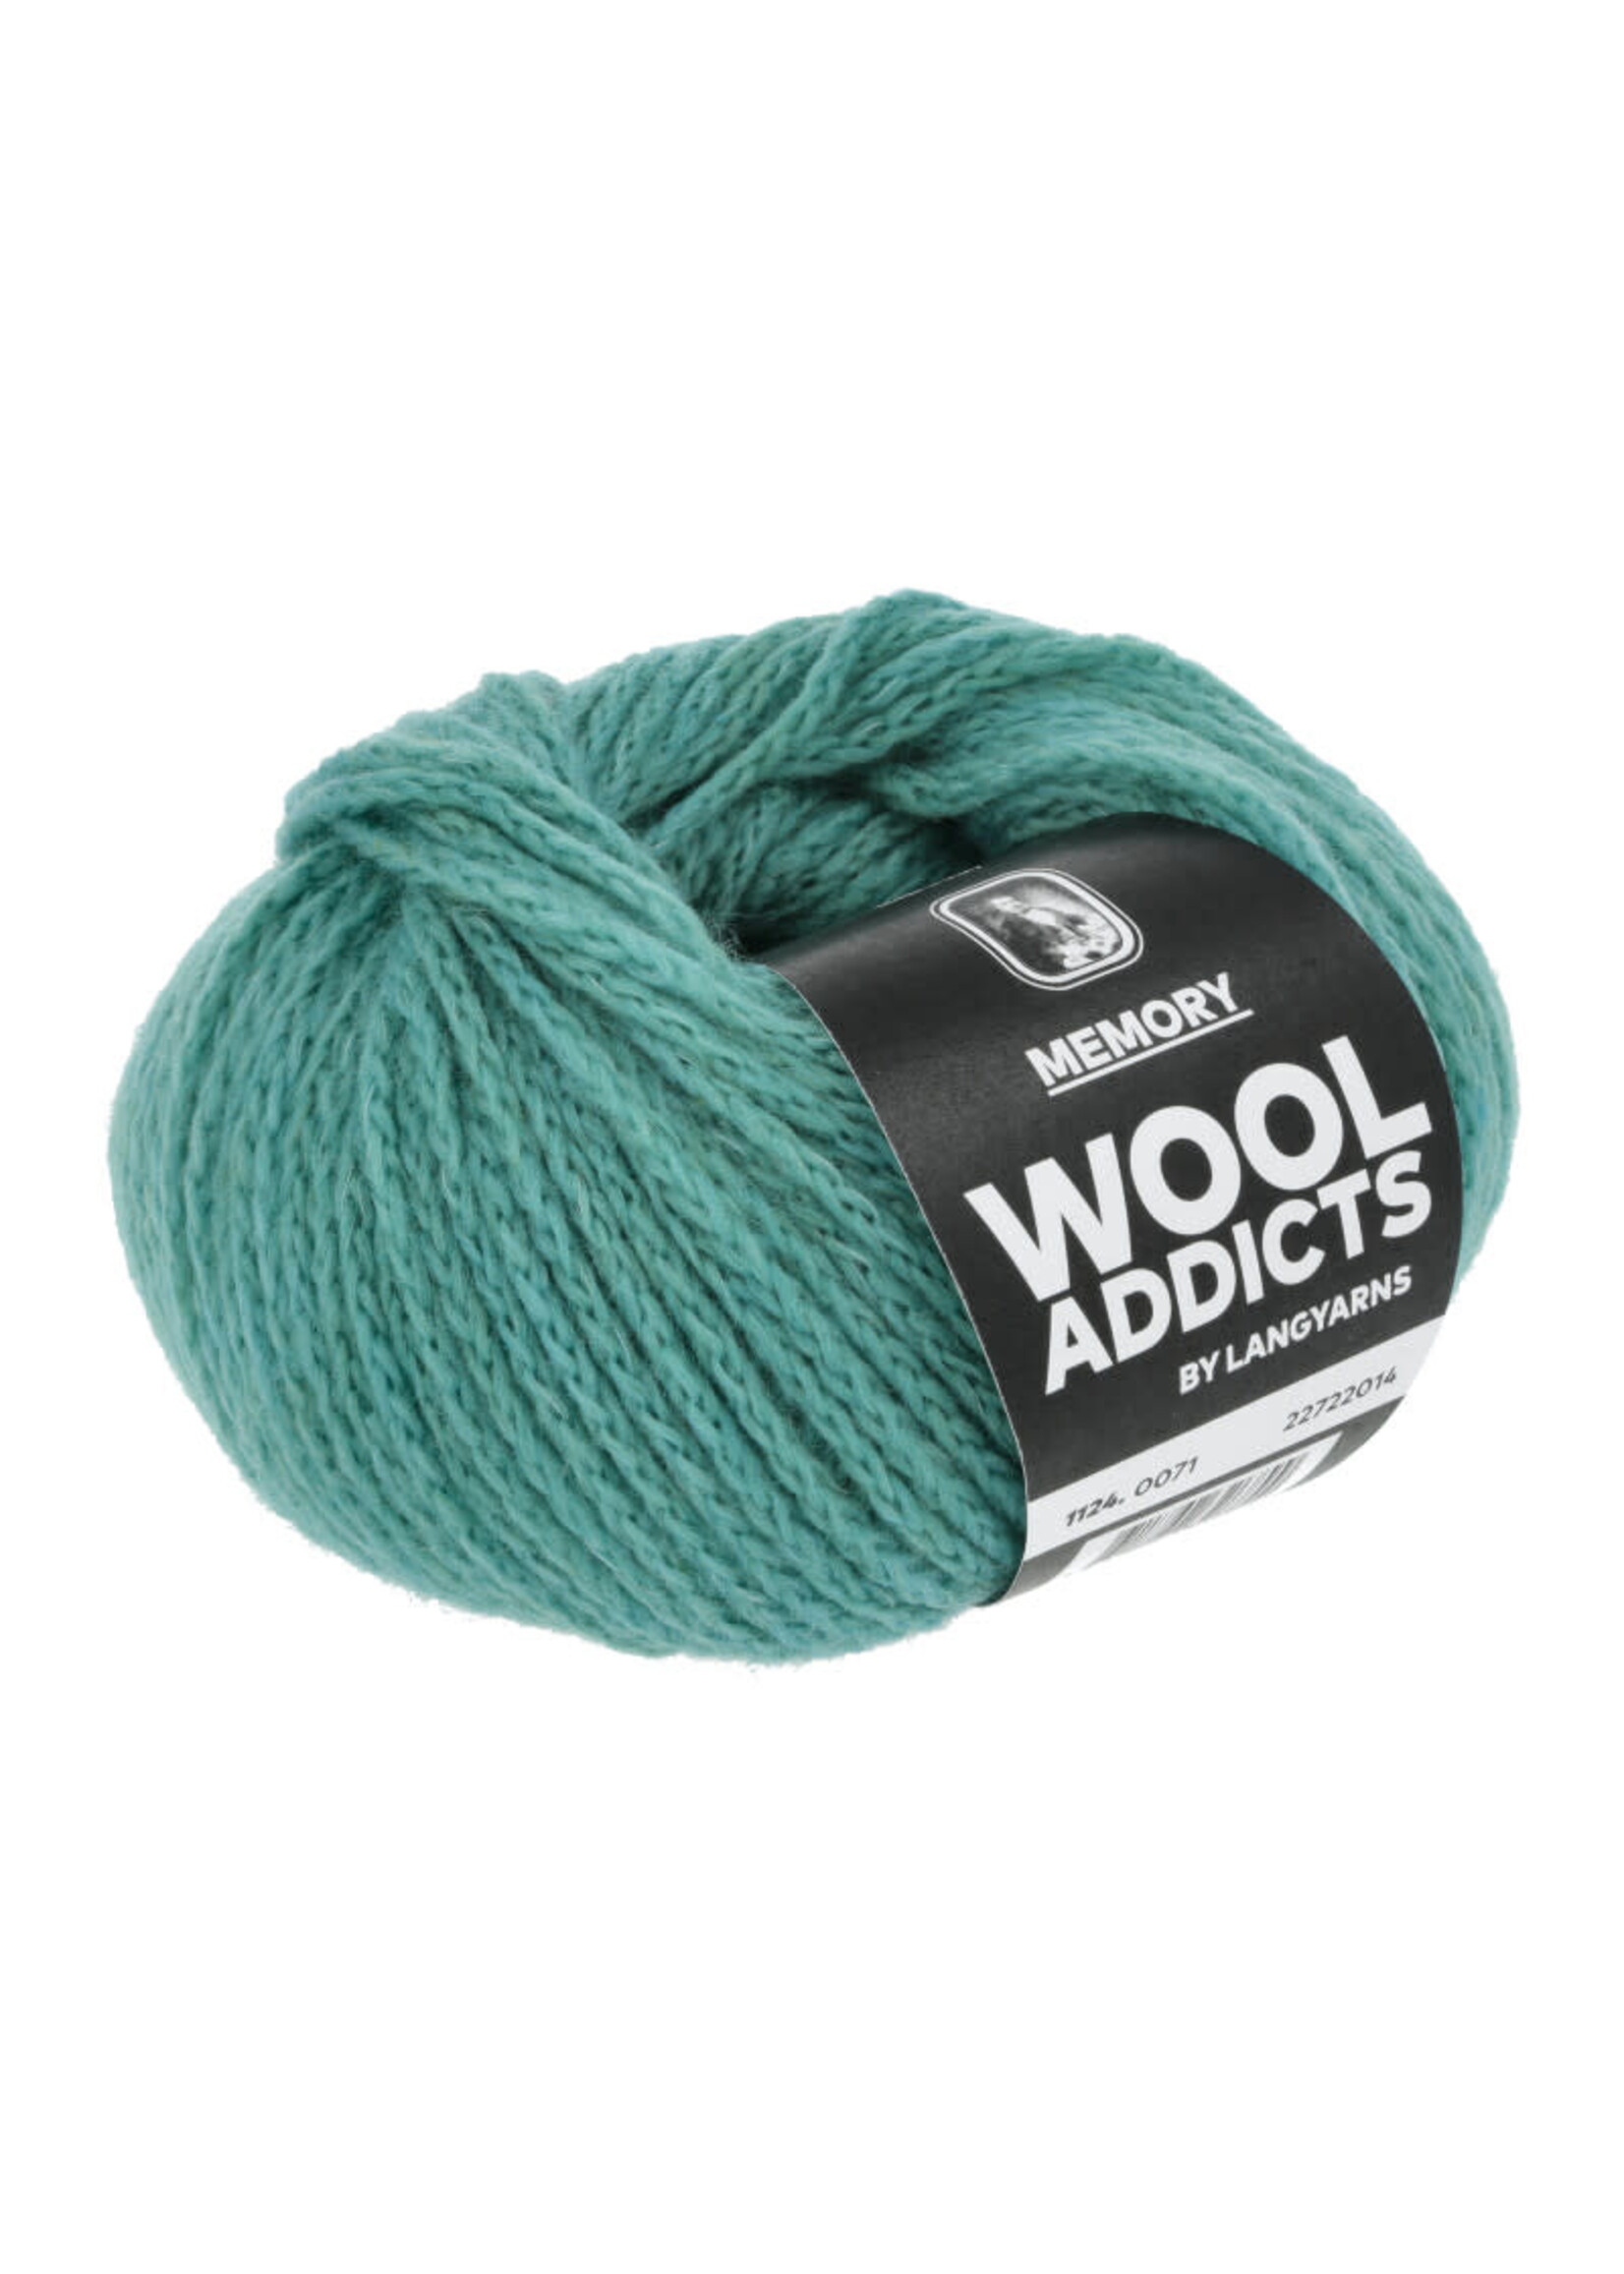 WoolAddicts Memory - 0071 sea water